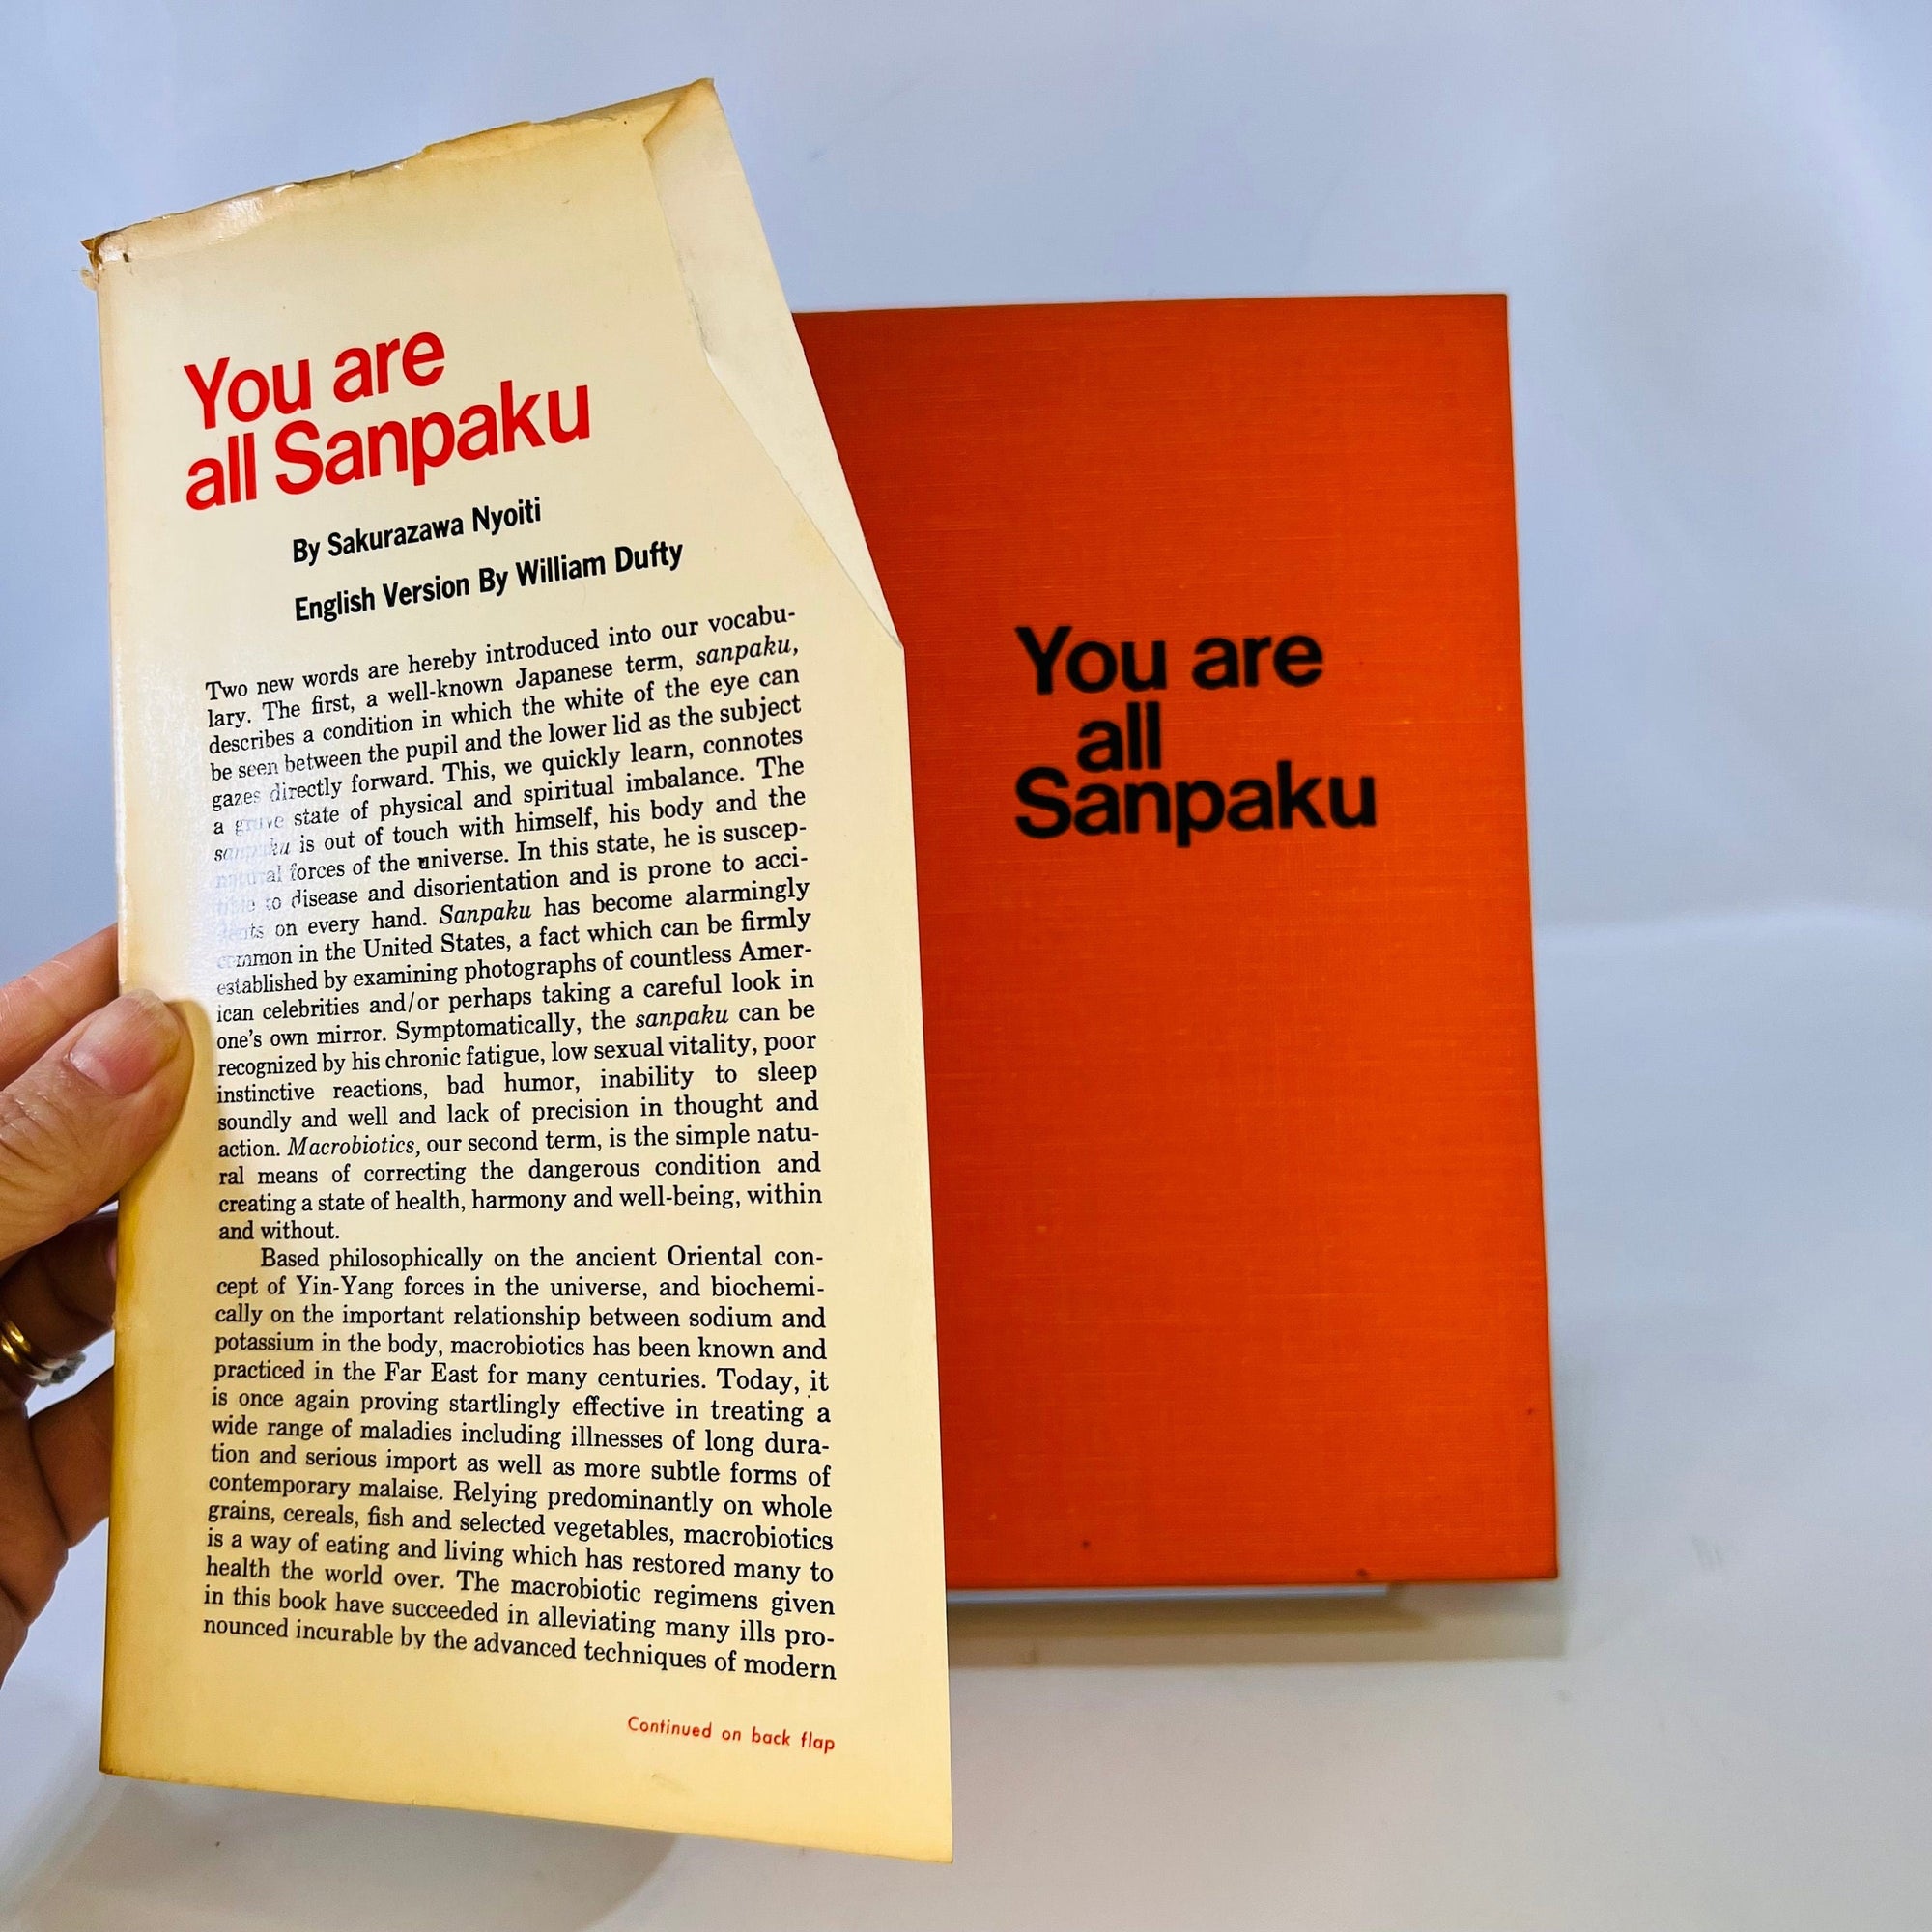 You Are All Sanpaku by Sakurazwa Nyoiti 1965 University Books Inc